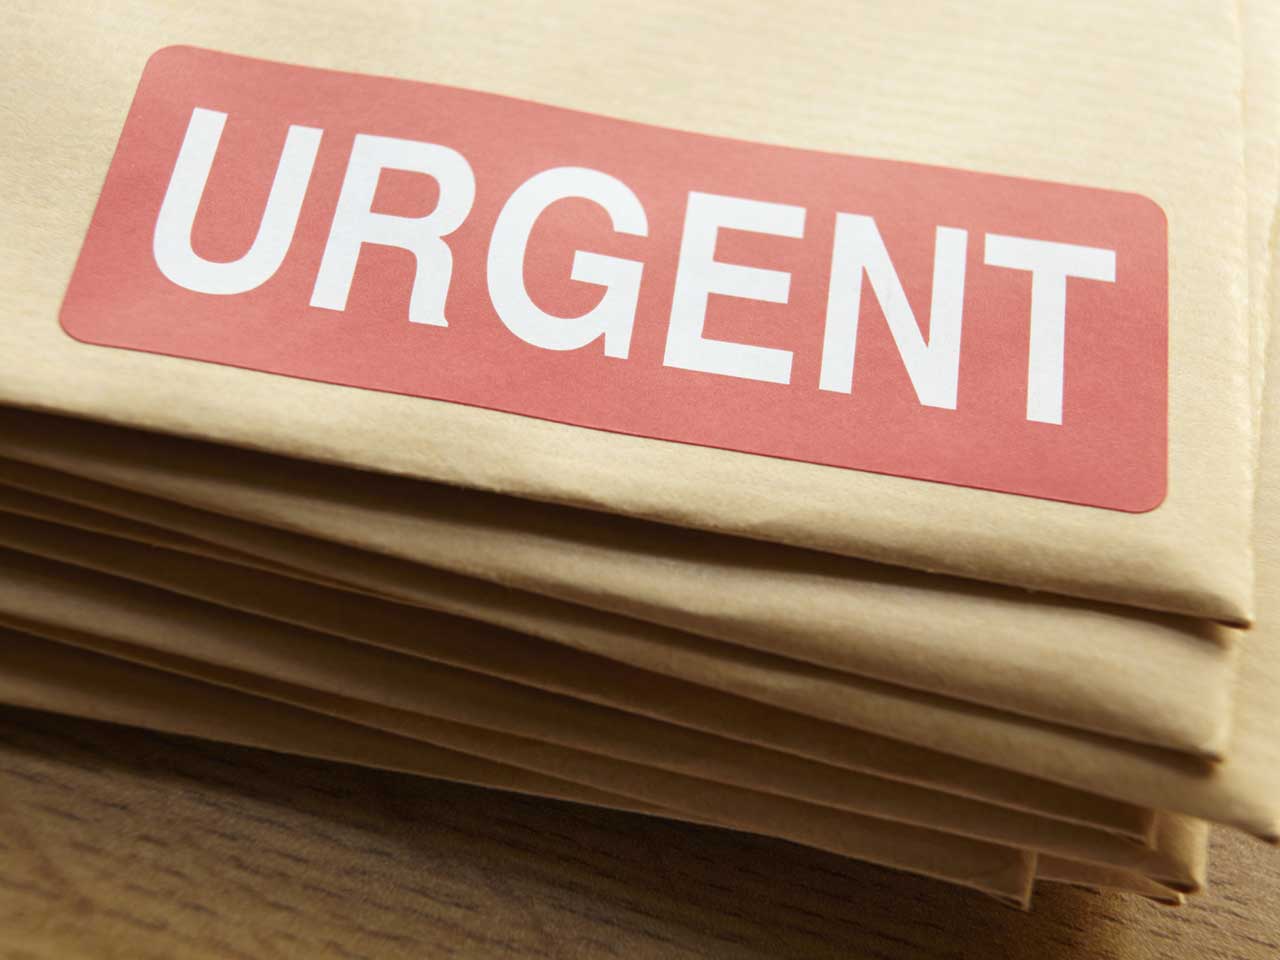 Letter parcels with urgent sticker